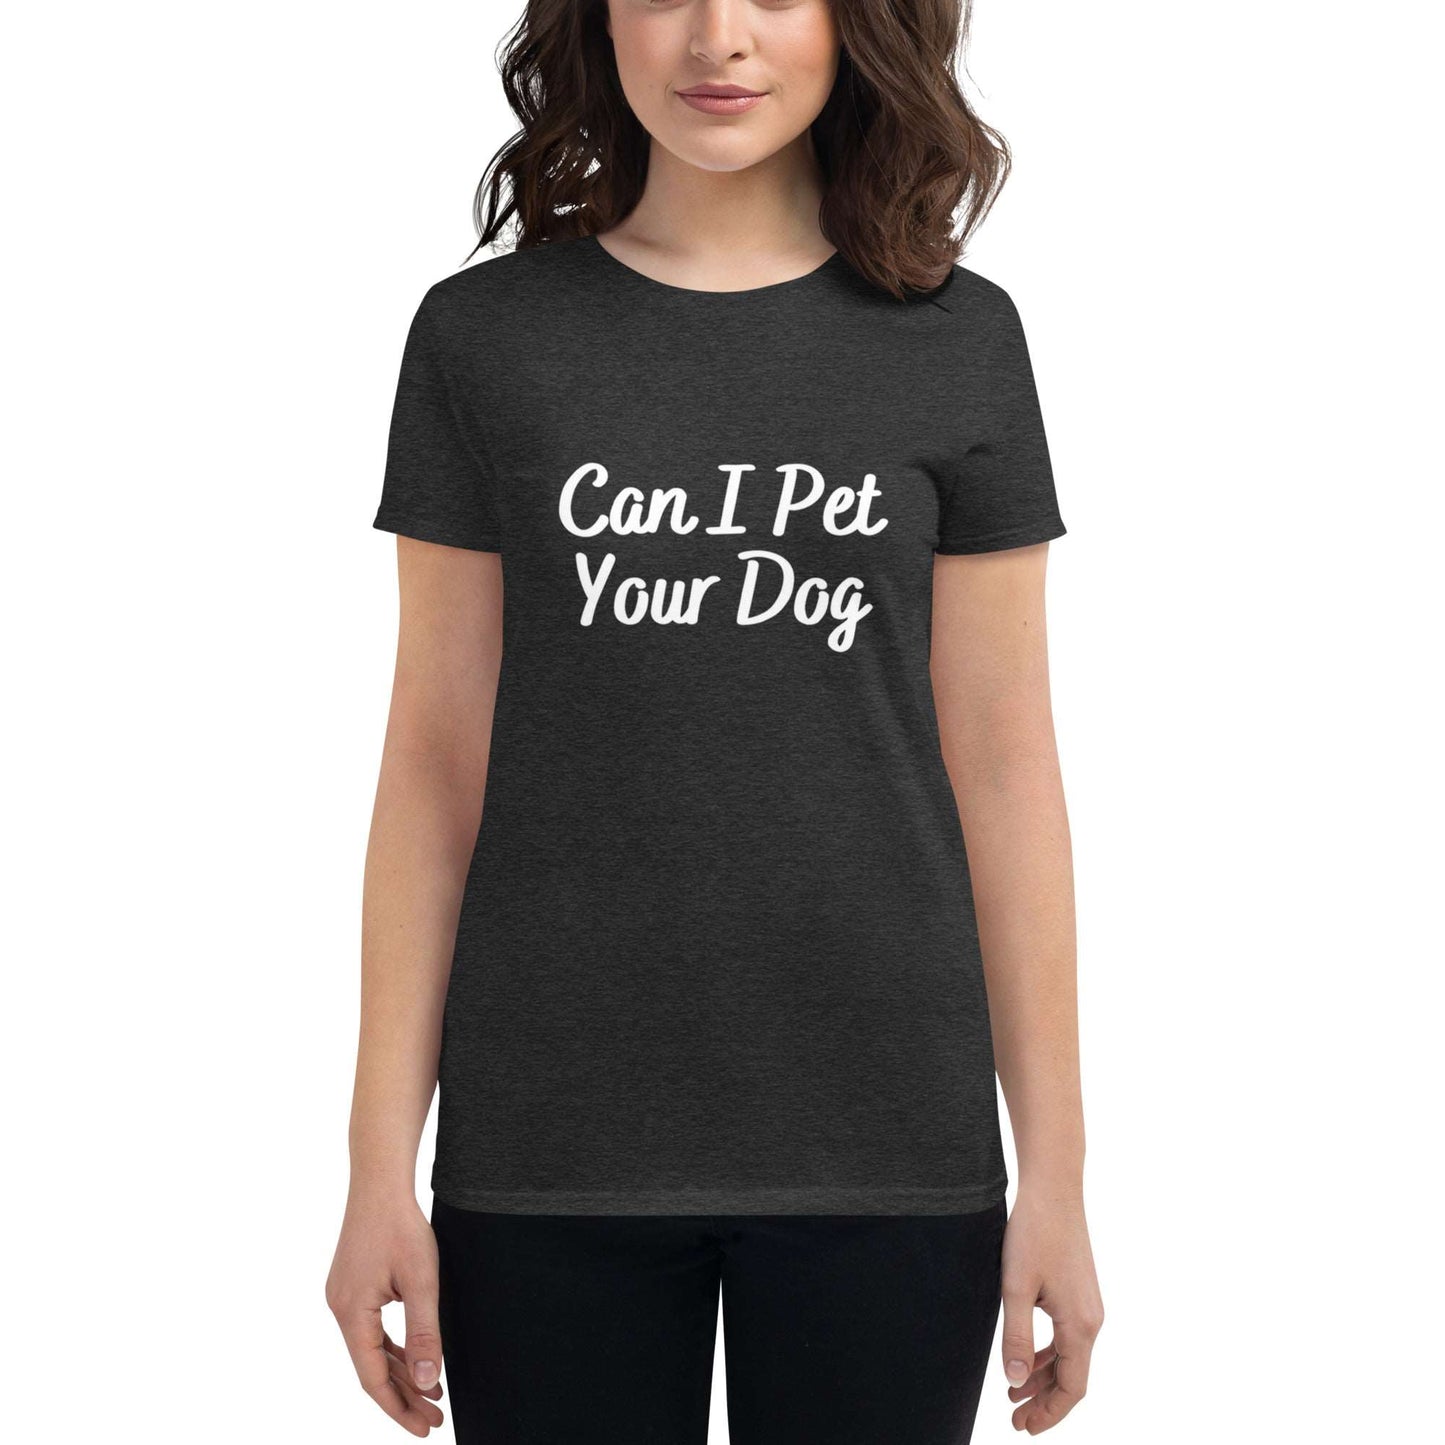 Can I Pet Your Dog Women's short sleeve t-shirt